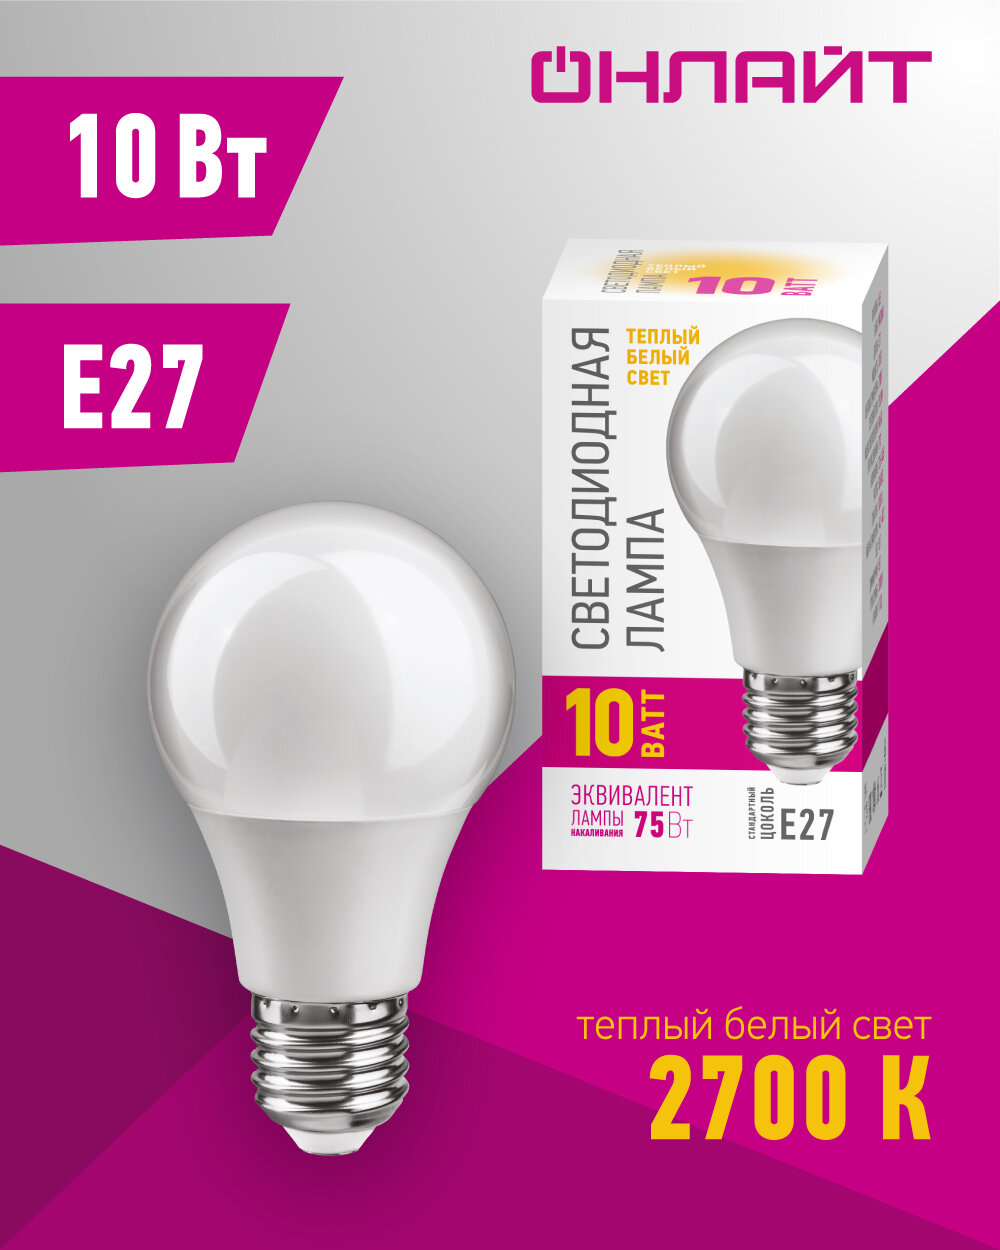 Светодиодная лампа онлайт 82 910, 10 Вт, груша, E27, теплый свет 2700К, 1 шт.